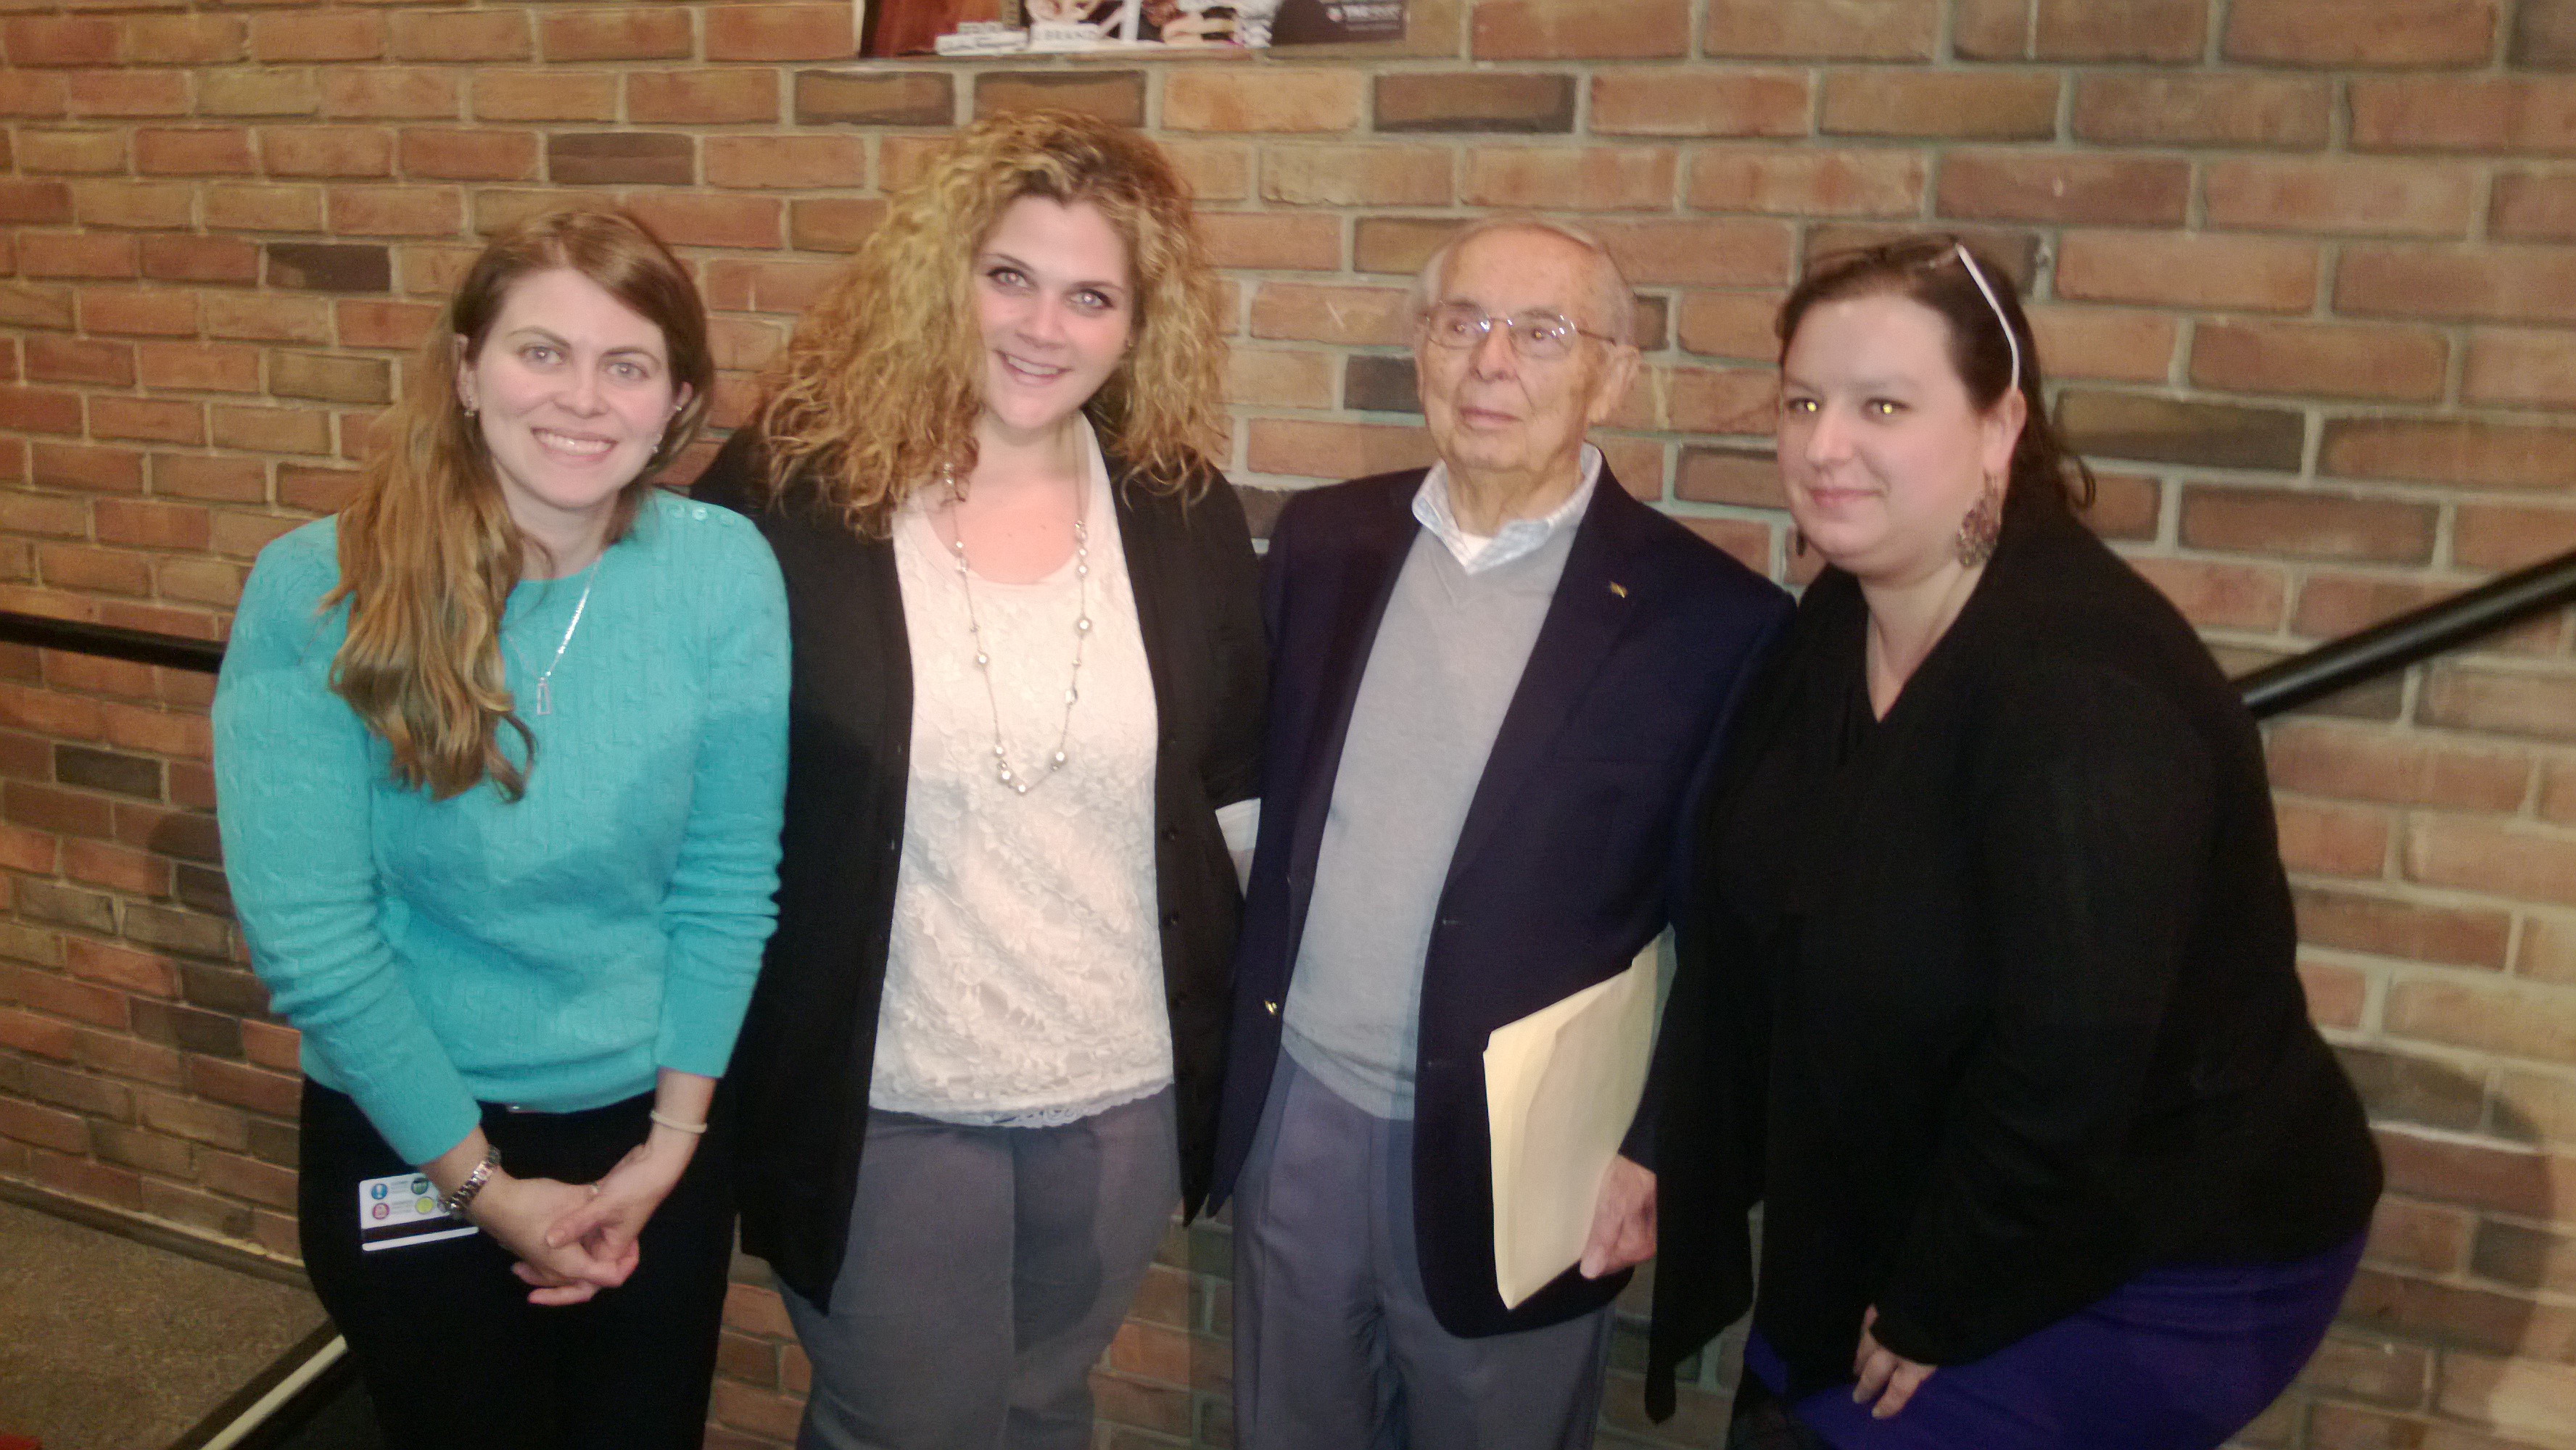 Picture of Holocaust survivor Jack Zaifman at Hunterdon Centra
l High School with school teachers on 03/26/14